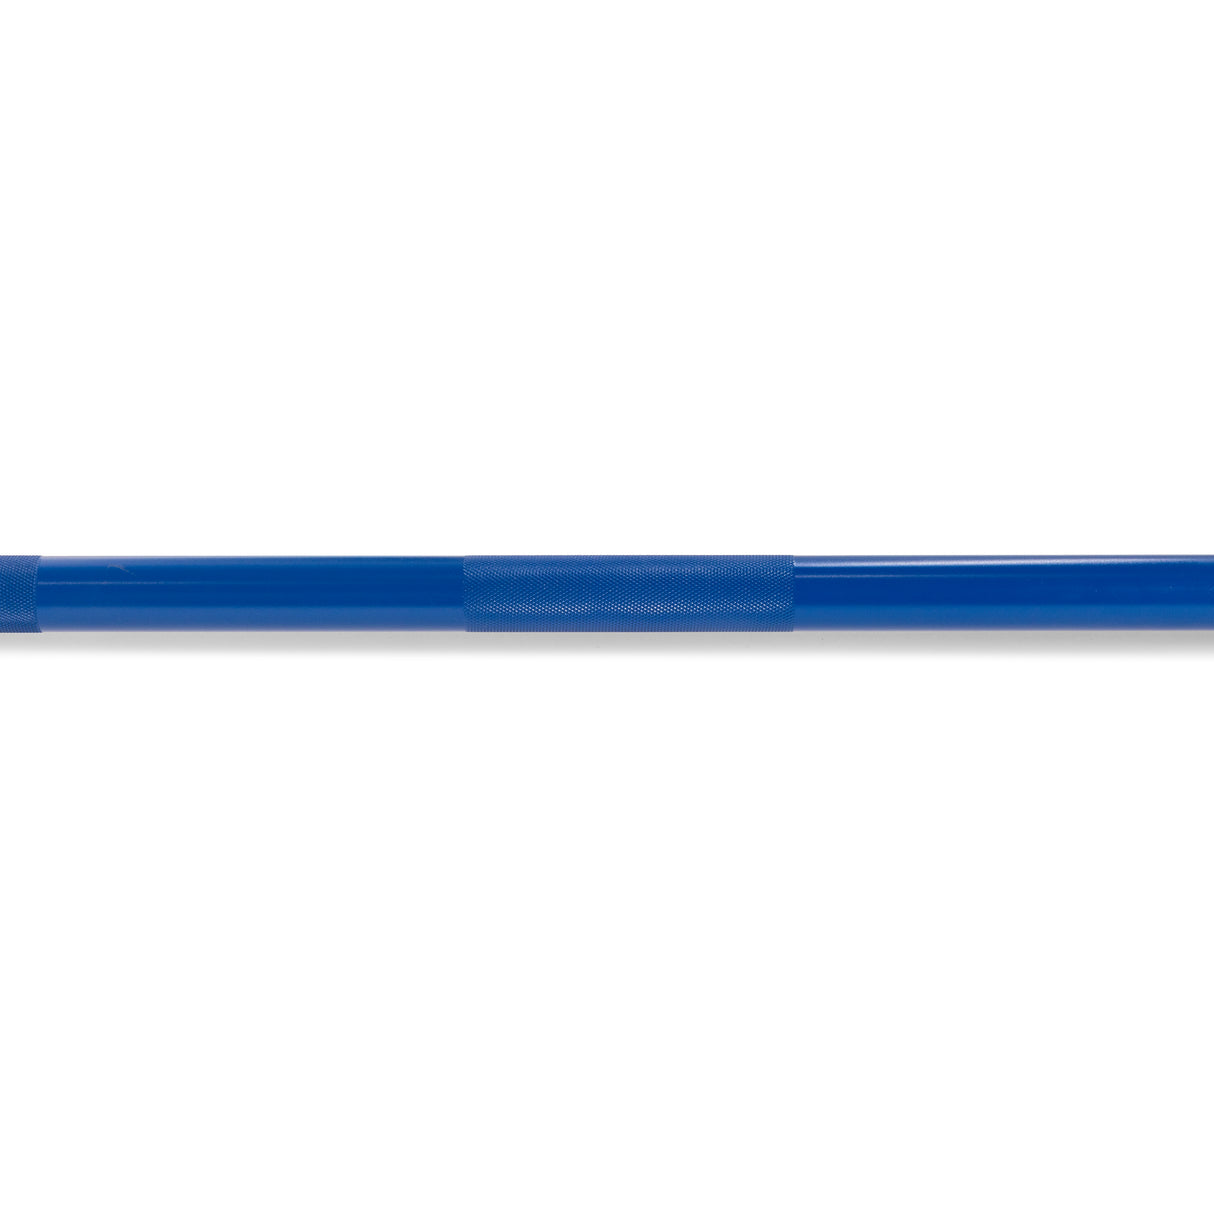 Hydra blue multi-purpose olympic barbell bar knurling